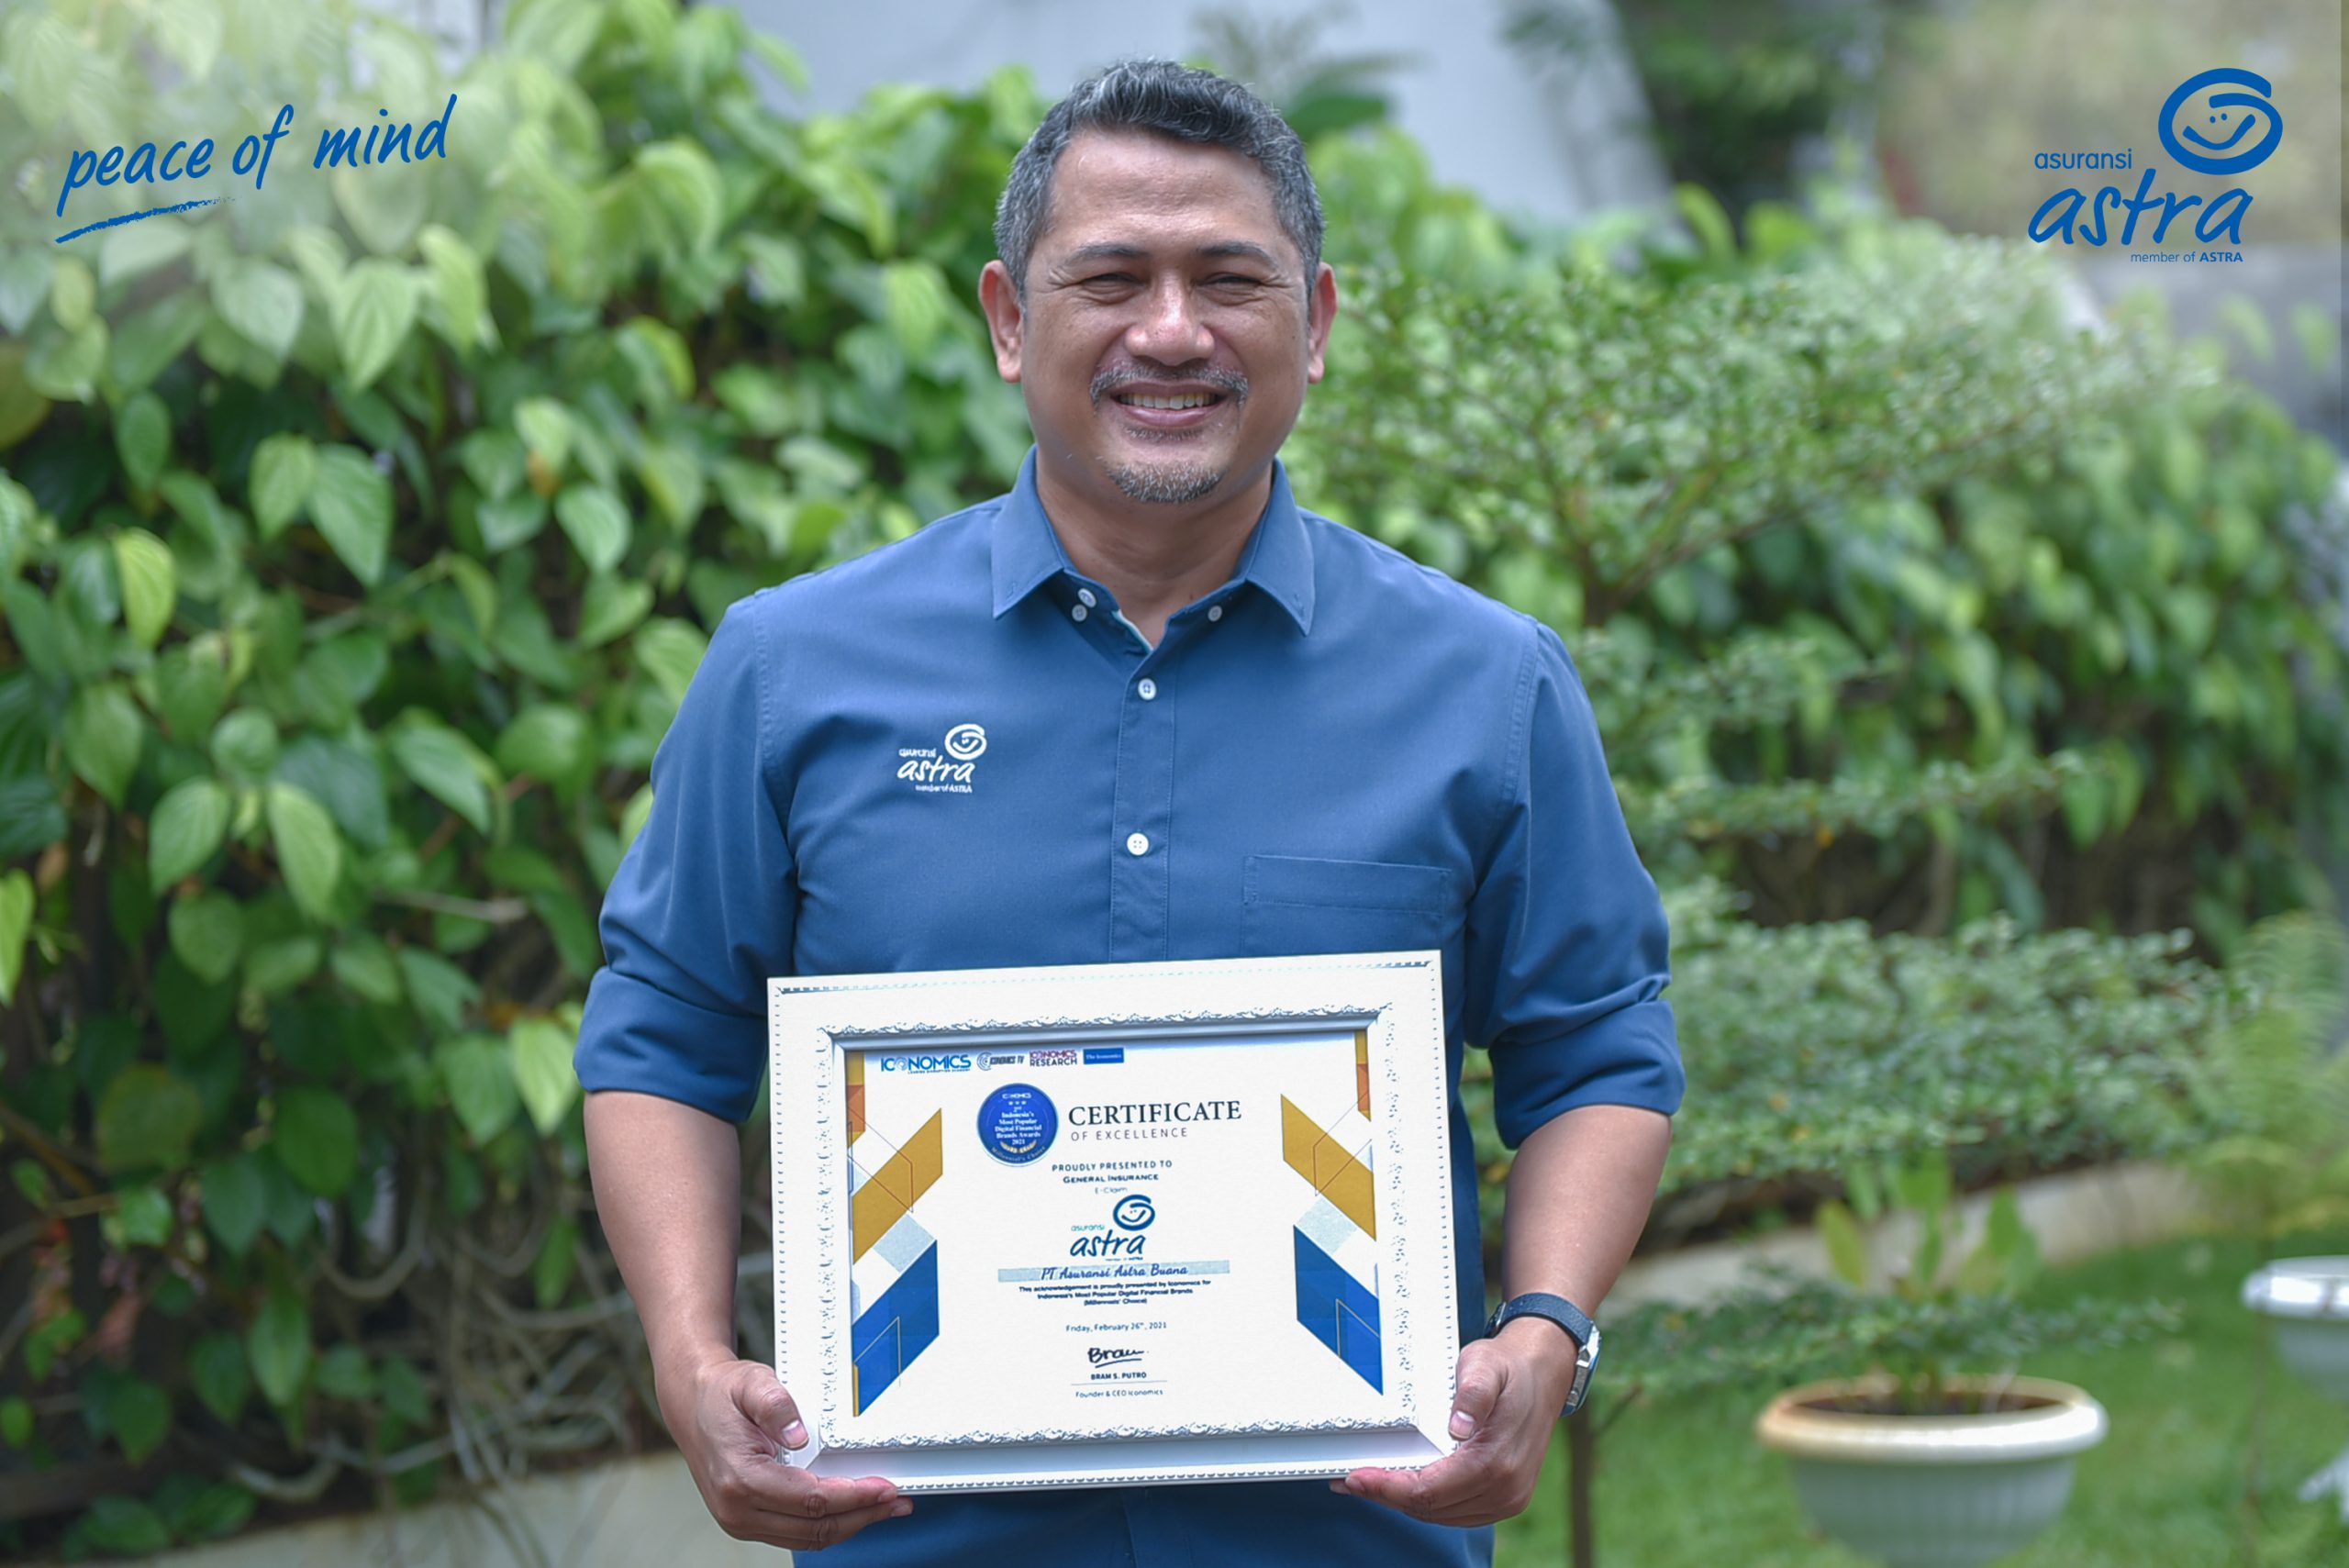 Maximiliaan Agatisianus, EVP Investment, Corporate Planning and Digital menerima penghargaan Indonesia’s Most Popular Digital Financial Brands 2021 dari Iconomics